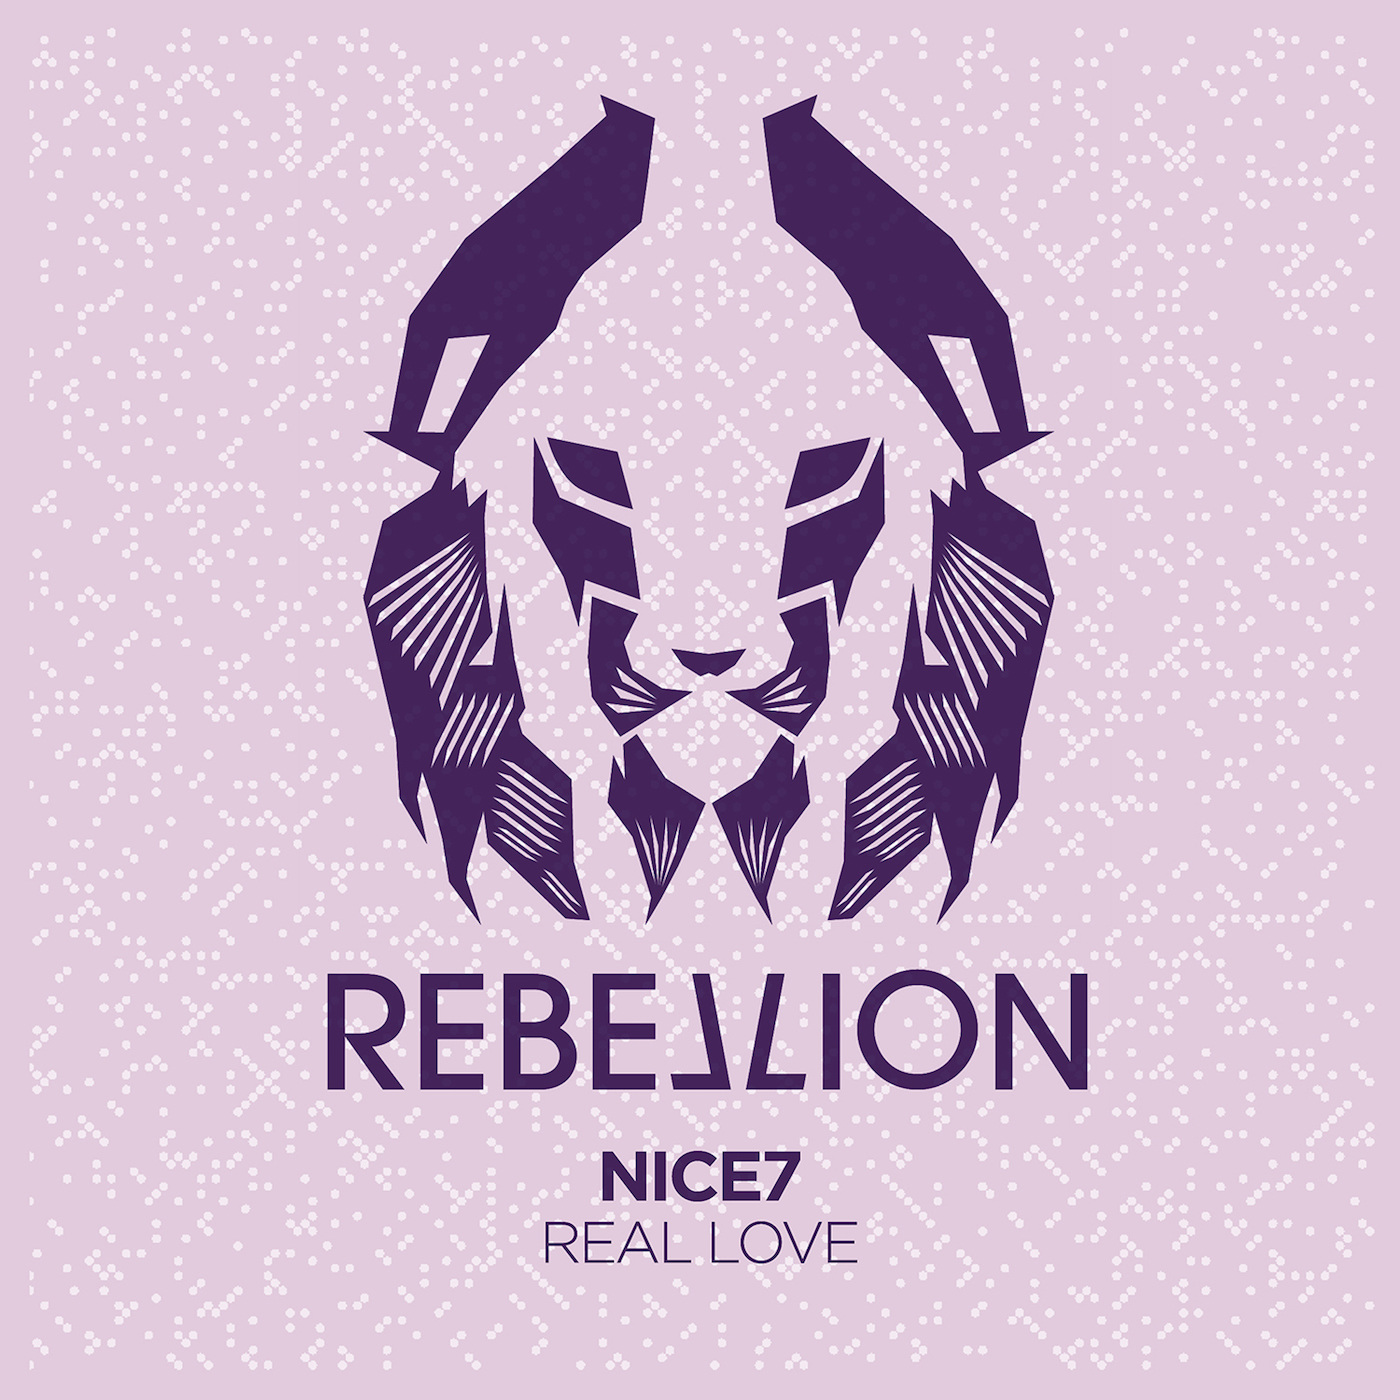 Nice7 - Real Love / Rebellion